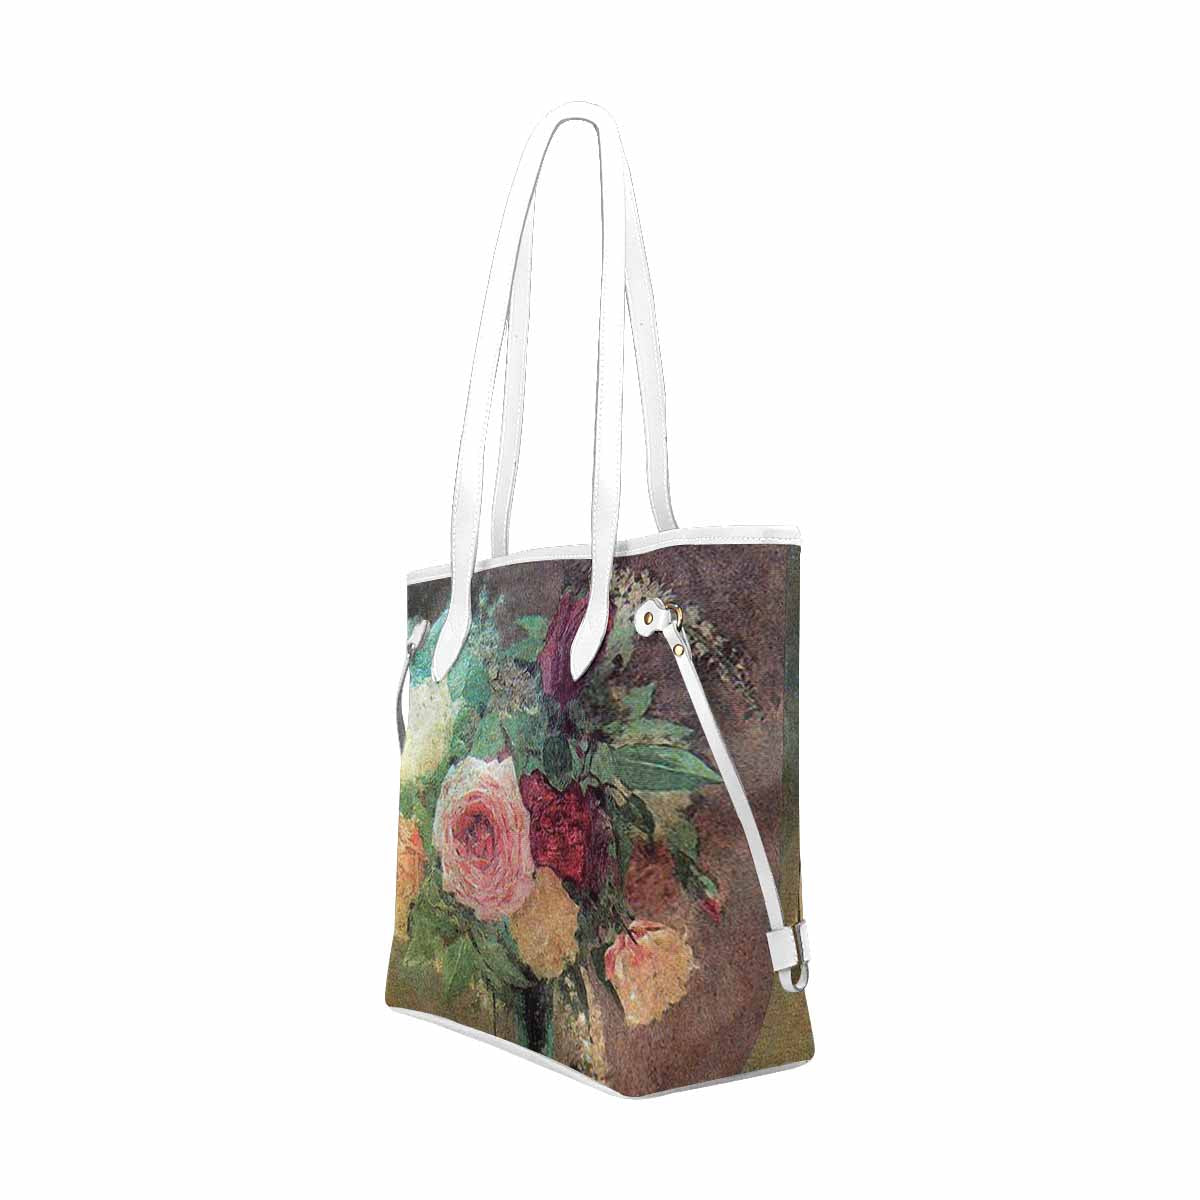 Vintage Floral Handbag, Classic Handbag, Mod 1695361 Design 29 WHITE TRIM